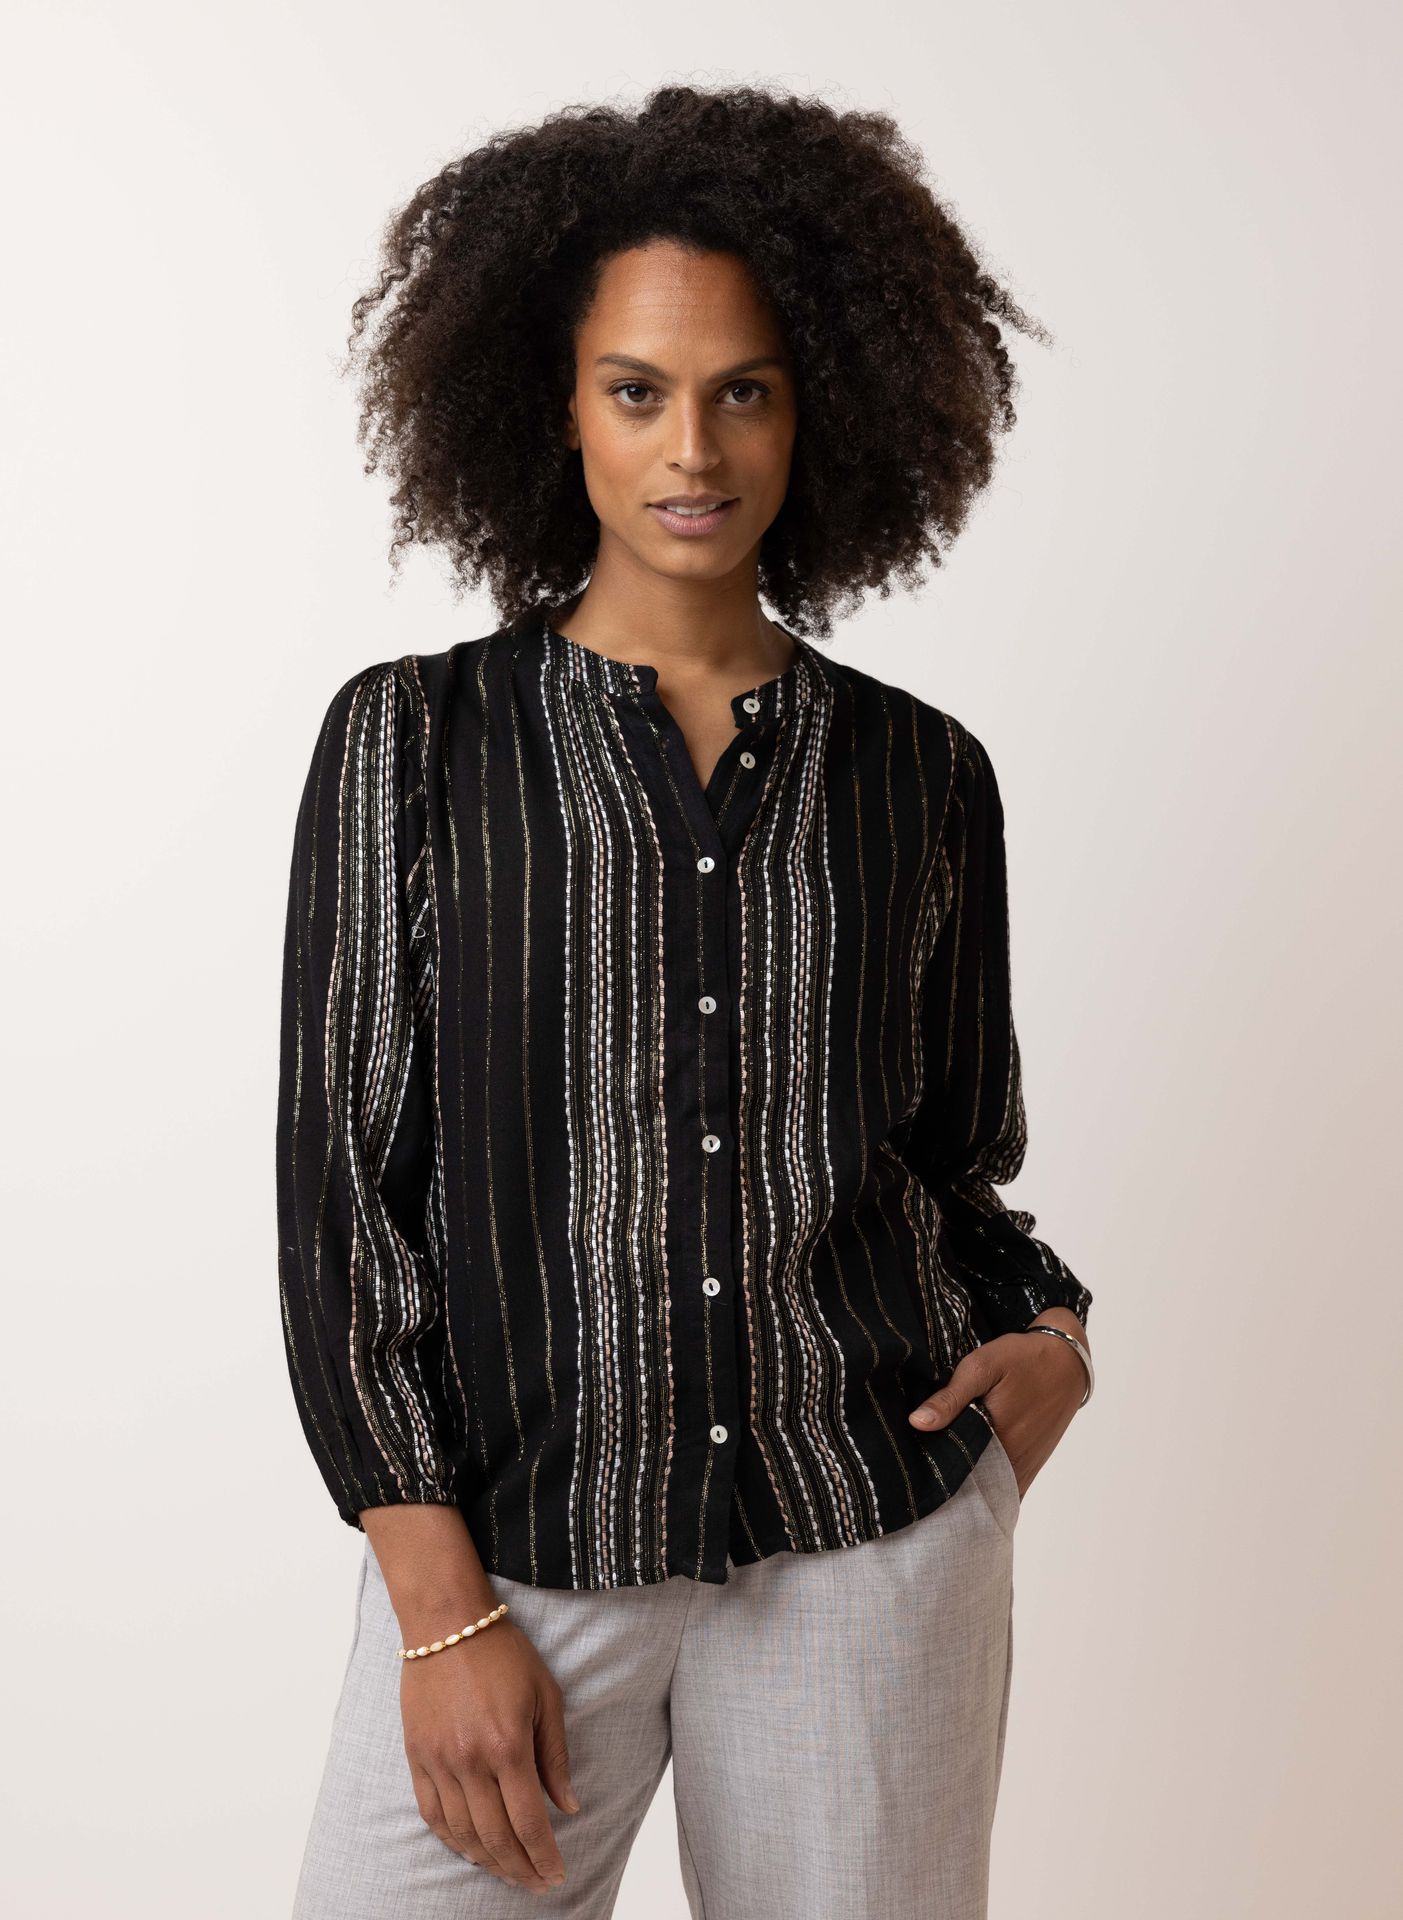 Norah Zwarte blouse black multicolor 214307-020